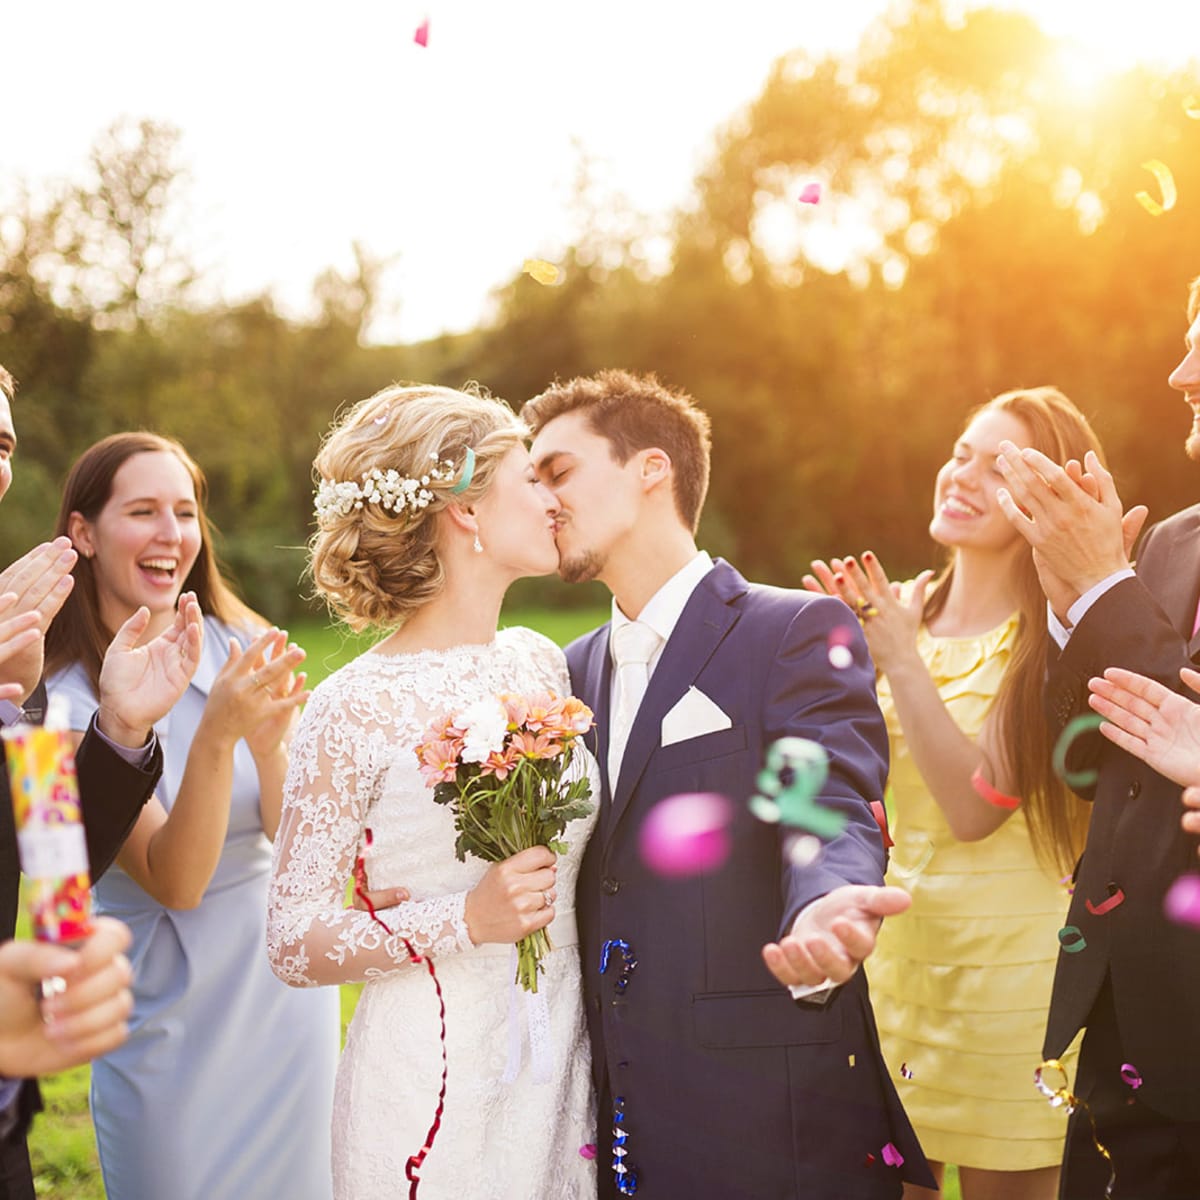 Average Wedding Dress Cost – UK Price Run-Down for Brides